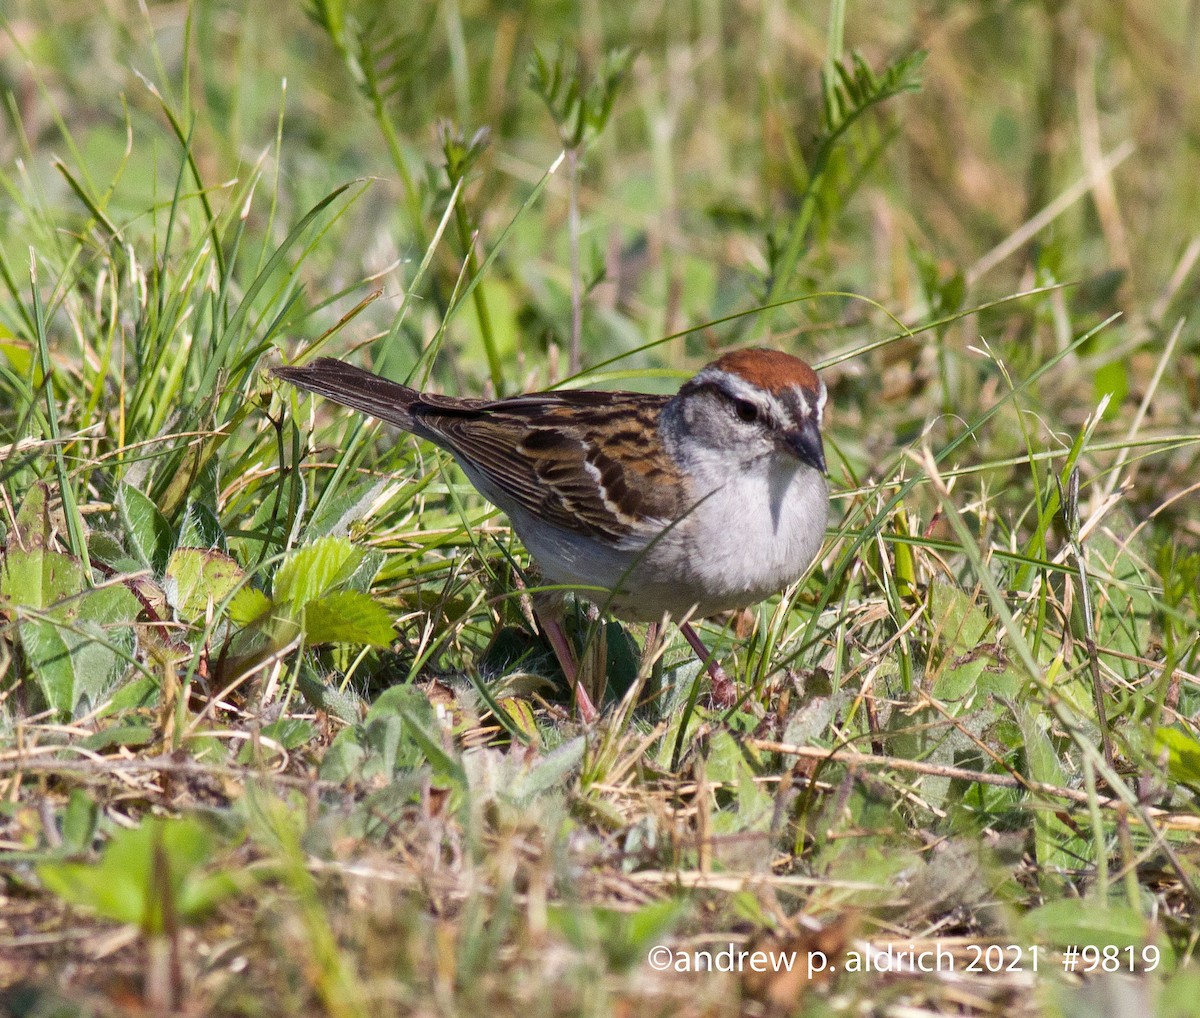 Chipping Sparrow - andrew aldrich